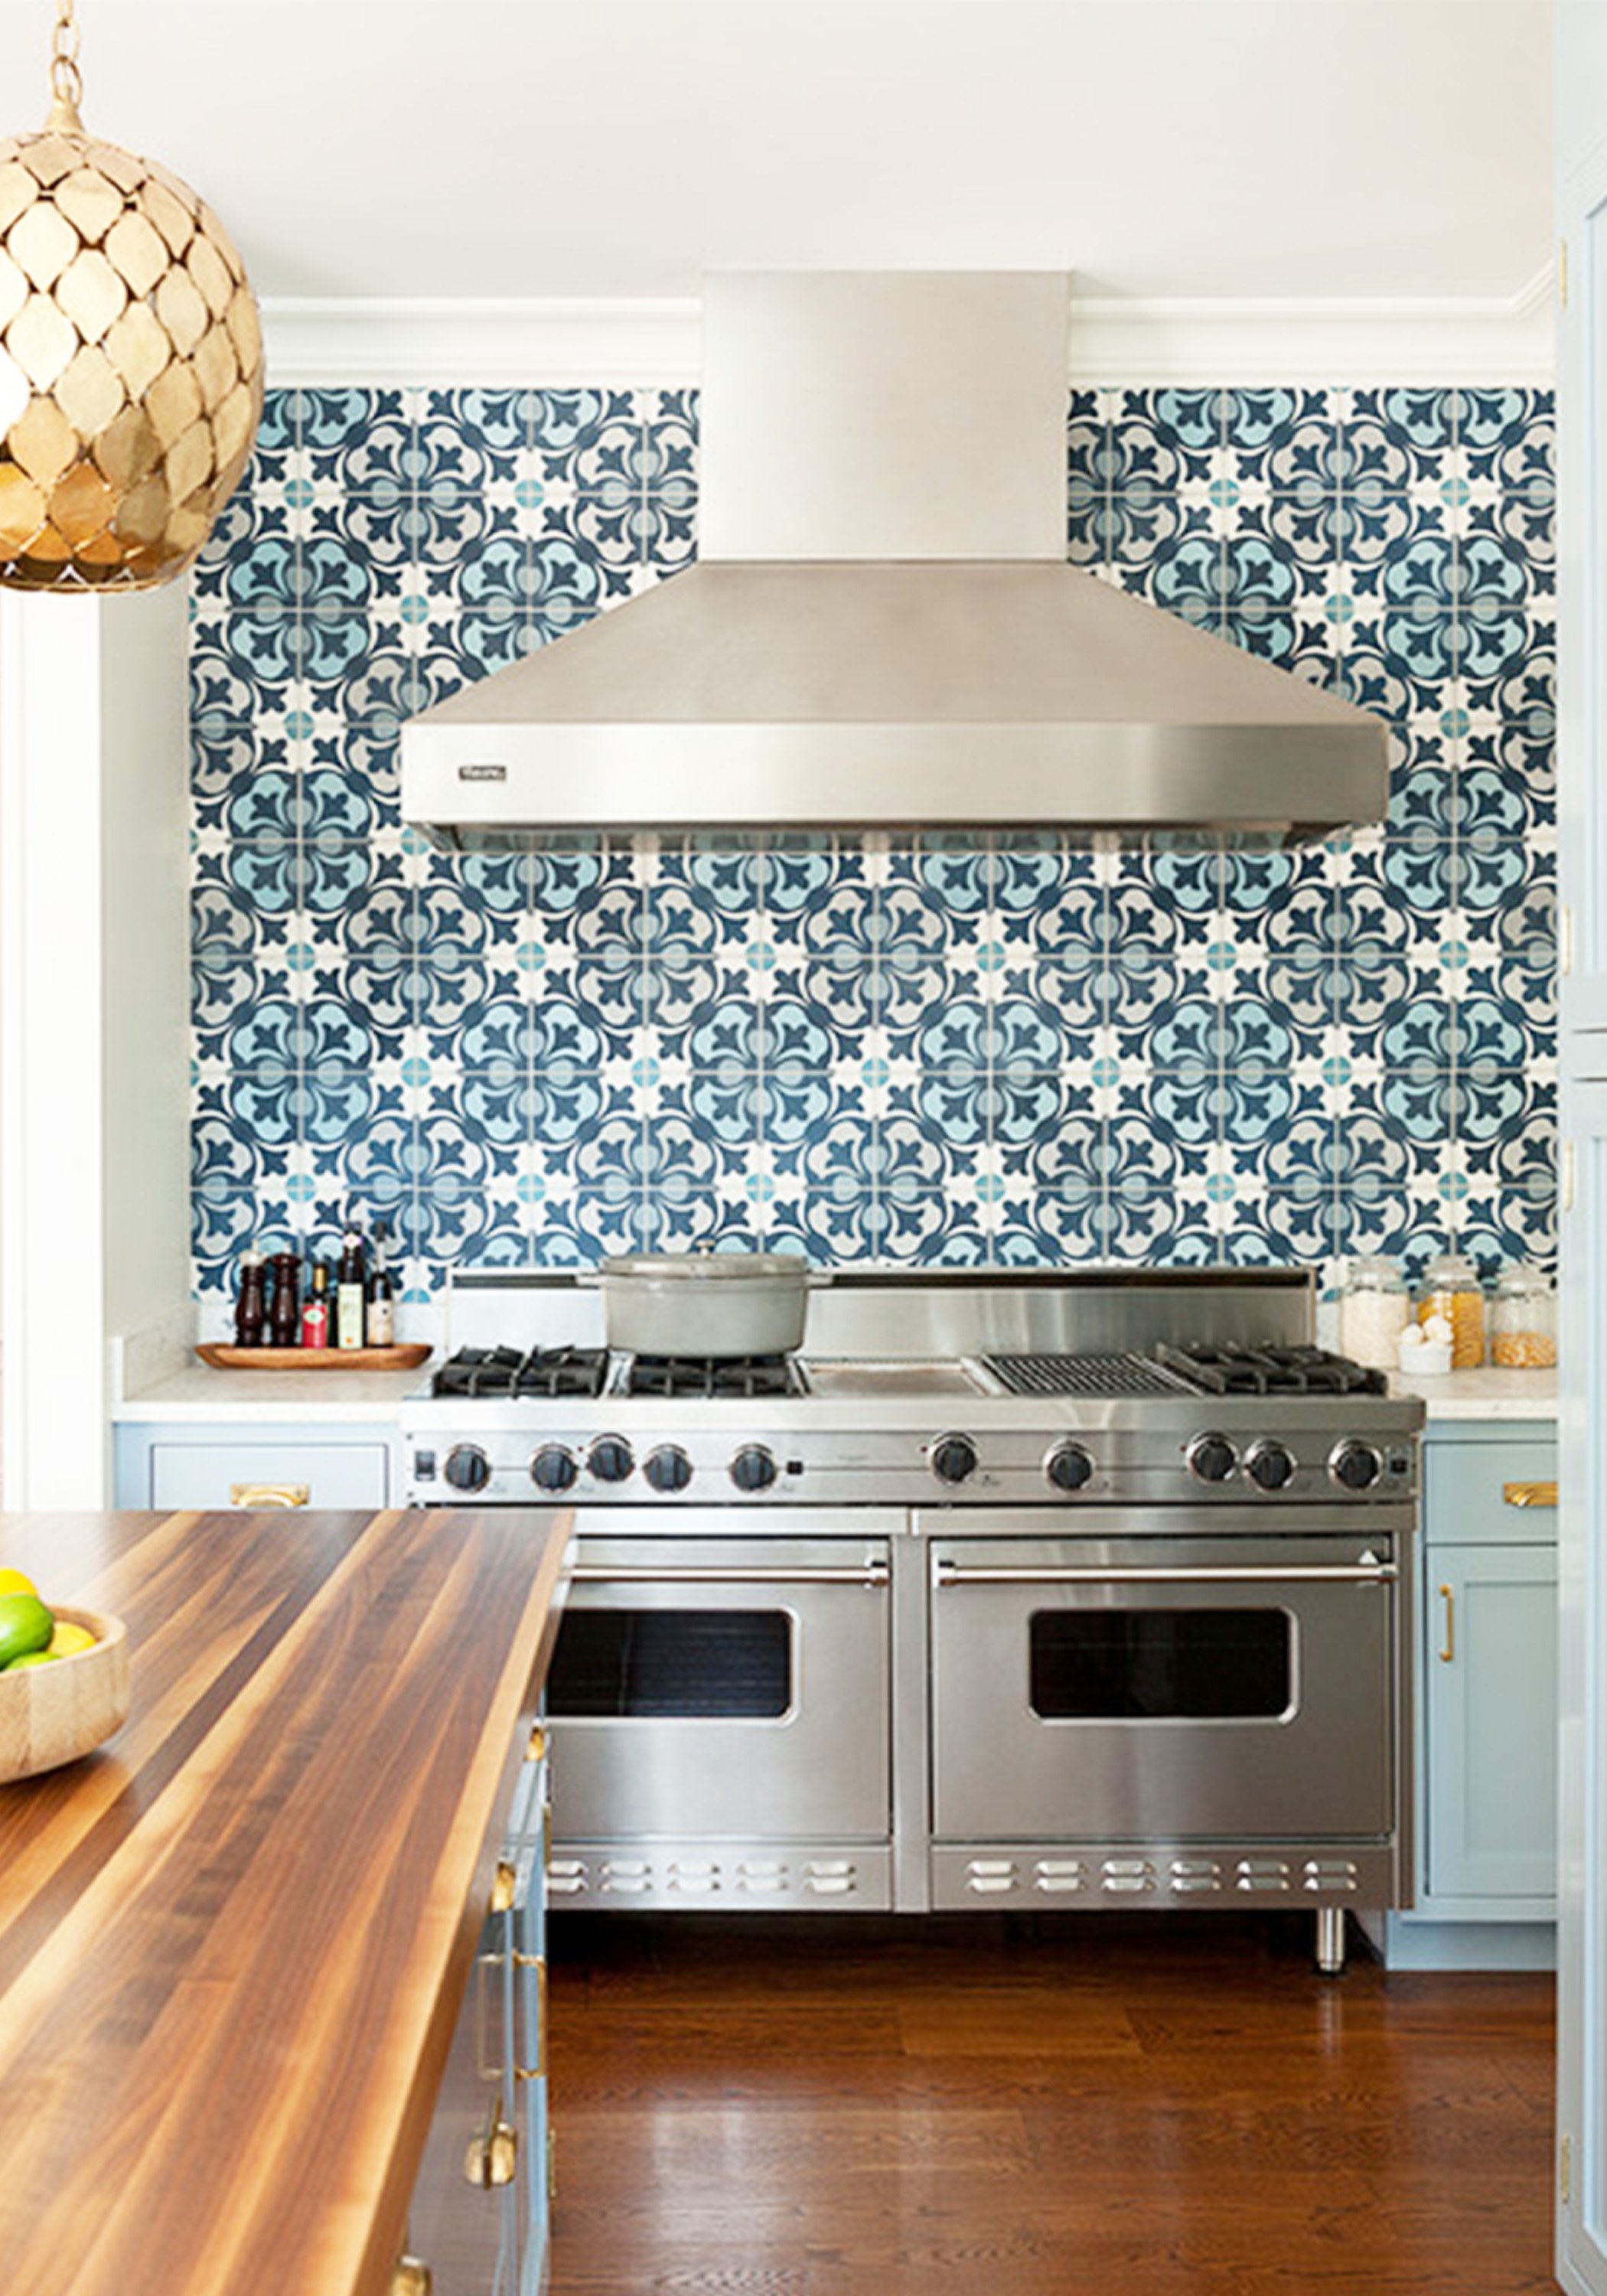 Кухня из плитки дизайн фото. Плитка Cicogres Chic Decor. Мозаика Backsplash Tile. Мфартце мозайка для кухни. Плитка для фортукка на ку.